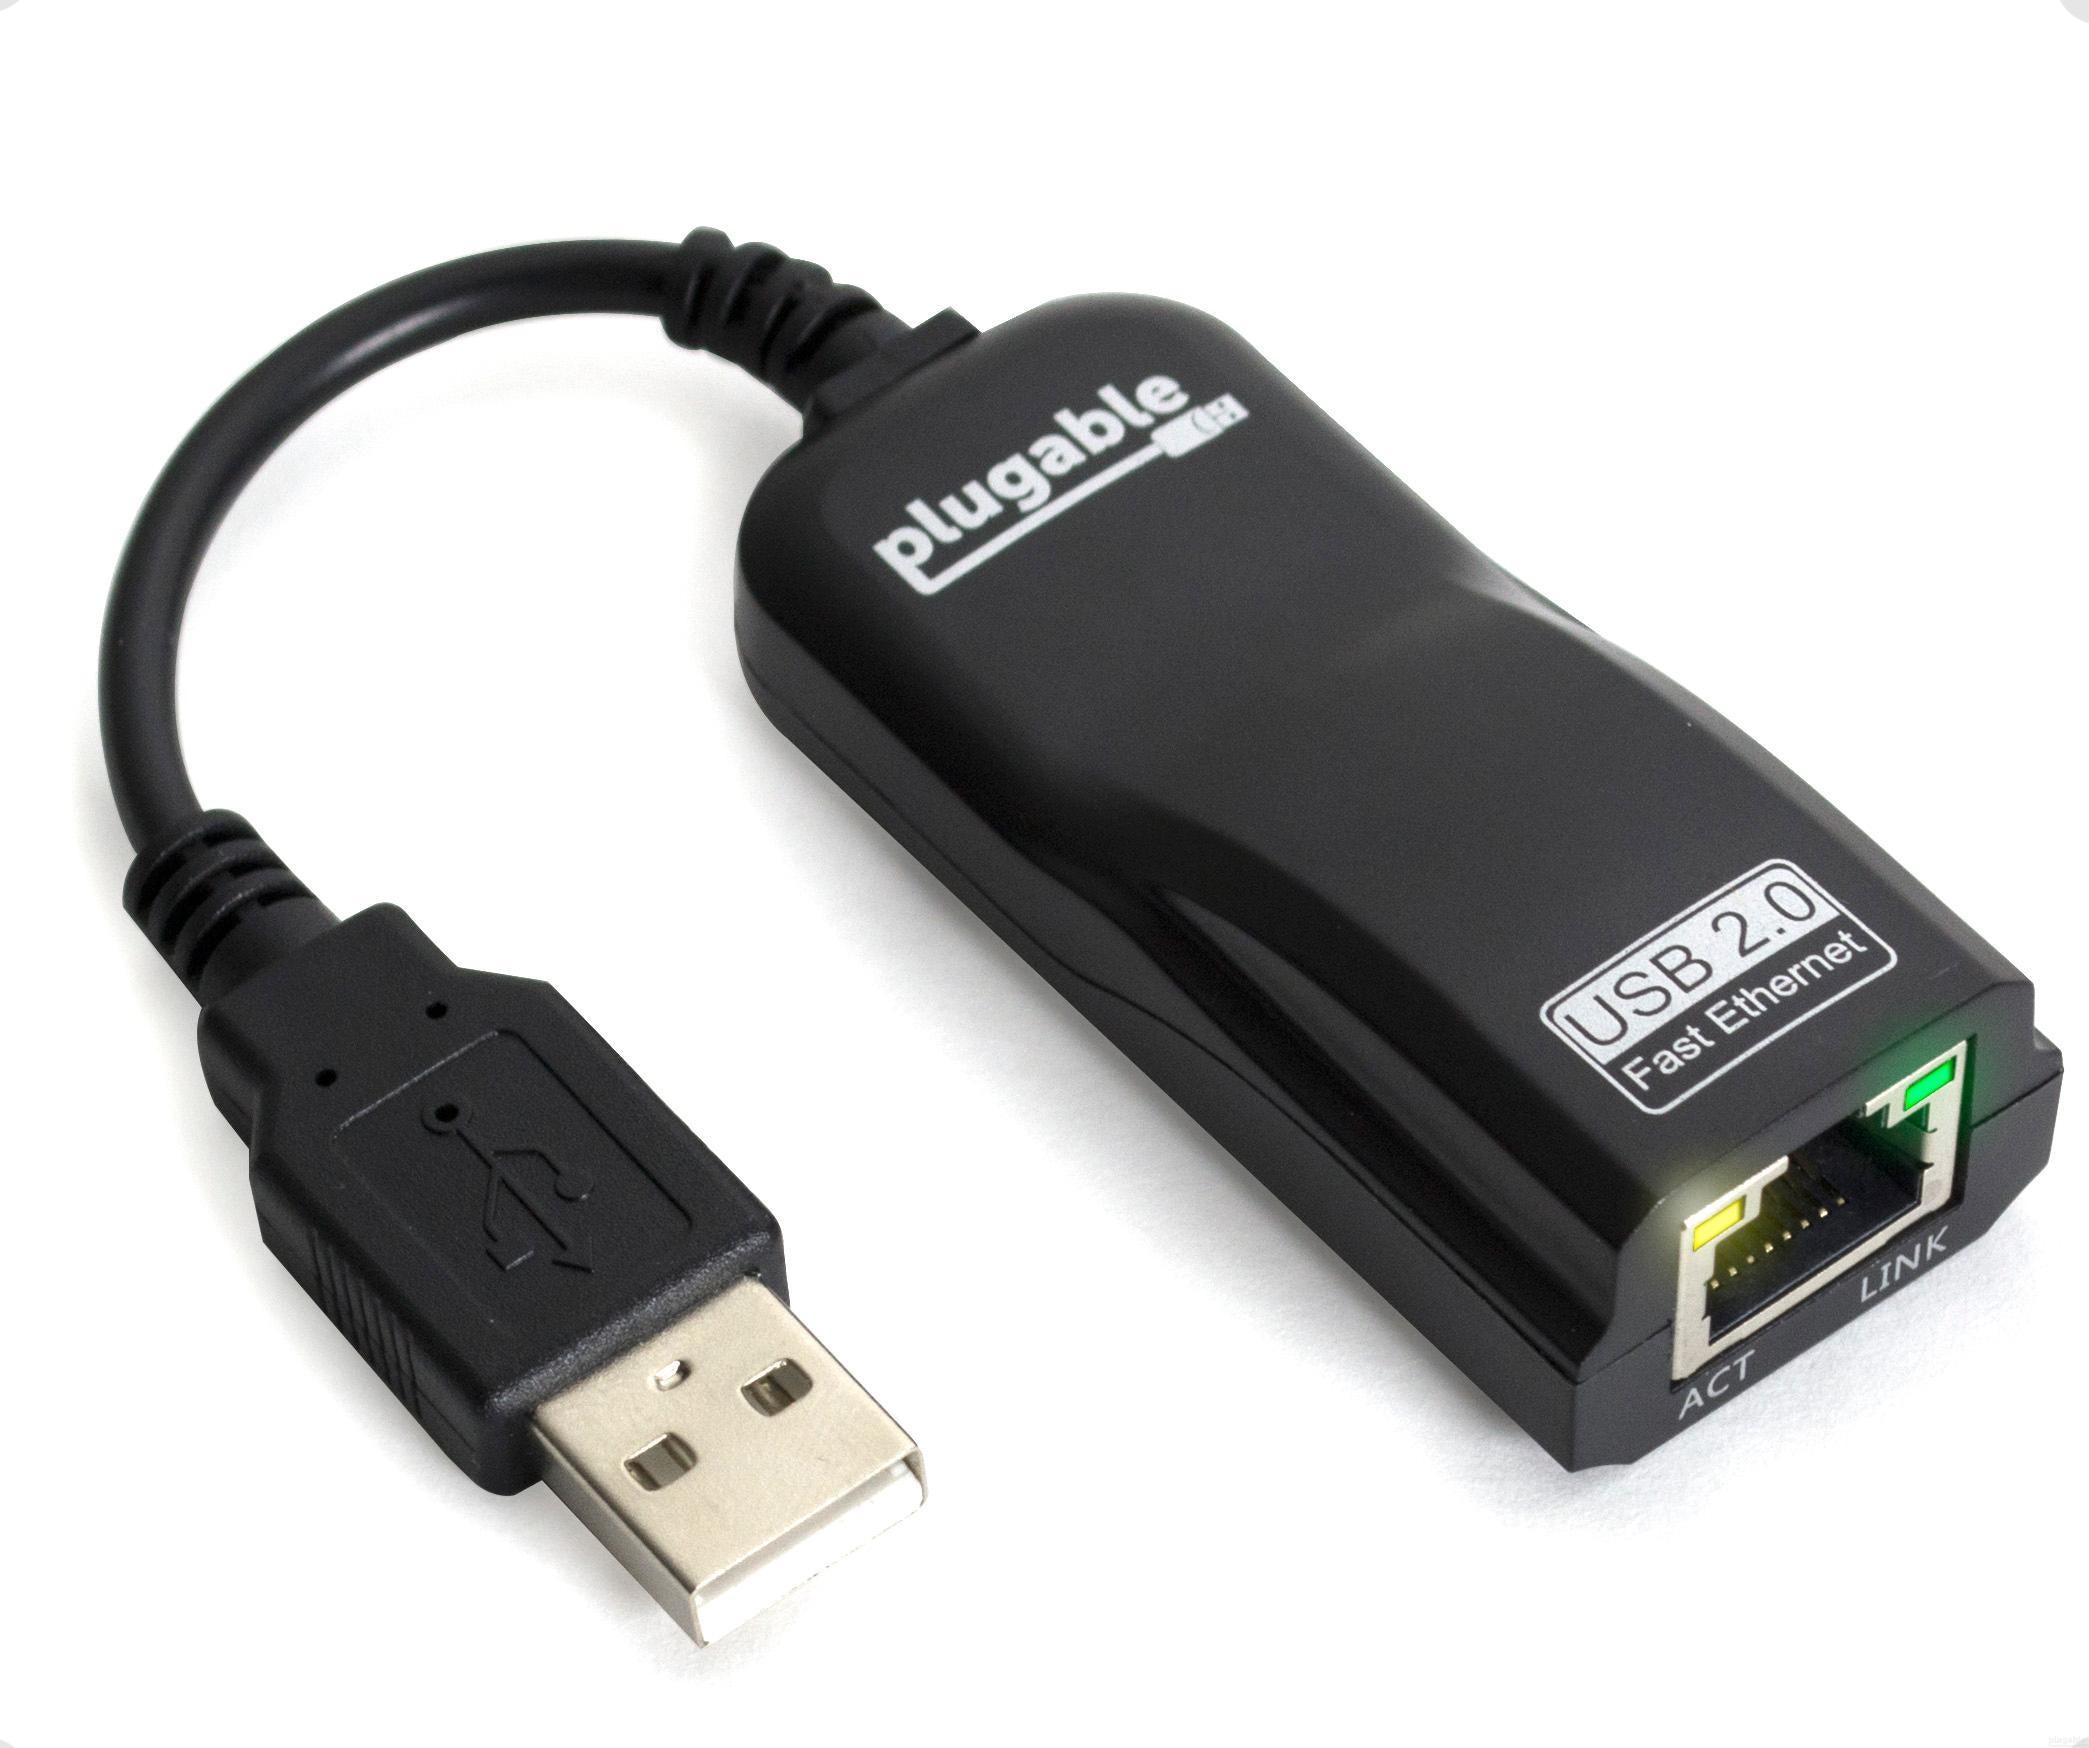 Plugable USB 2.0 10/100 Ethernet Adapter – Plugable